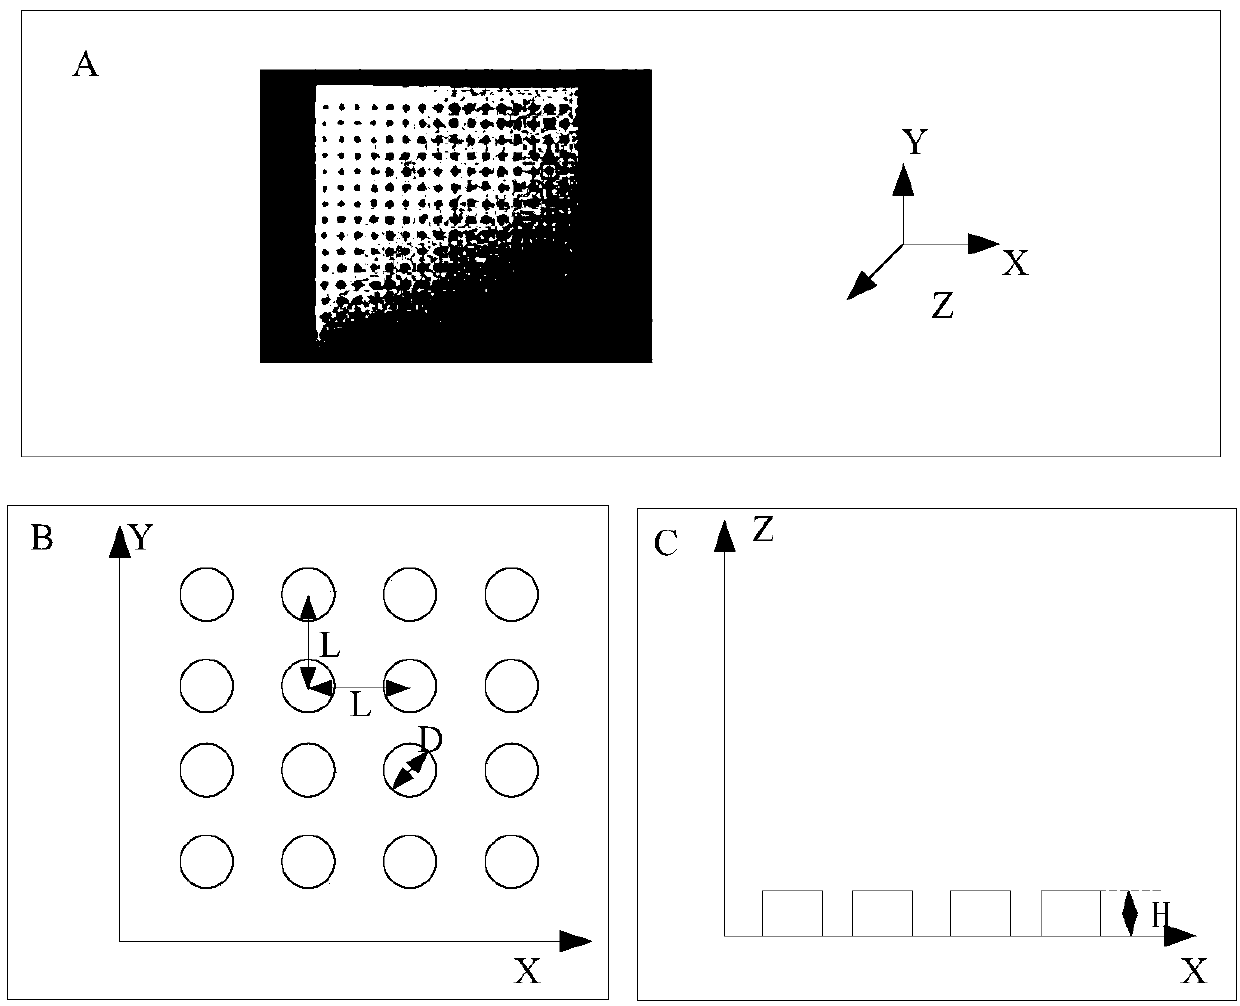 Textural coarseness quantitative evaluation method based on signal detection theory